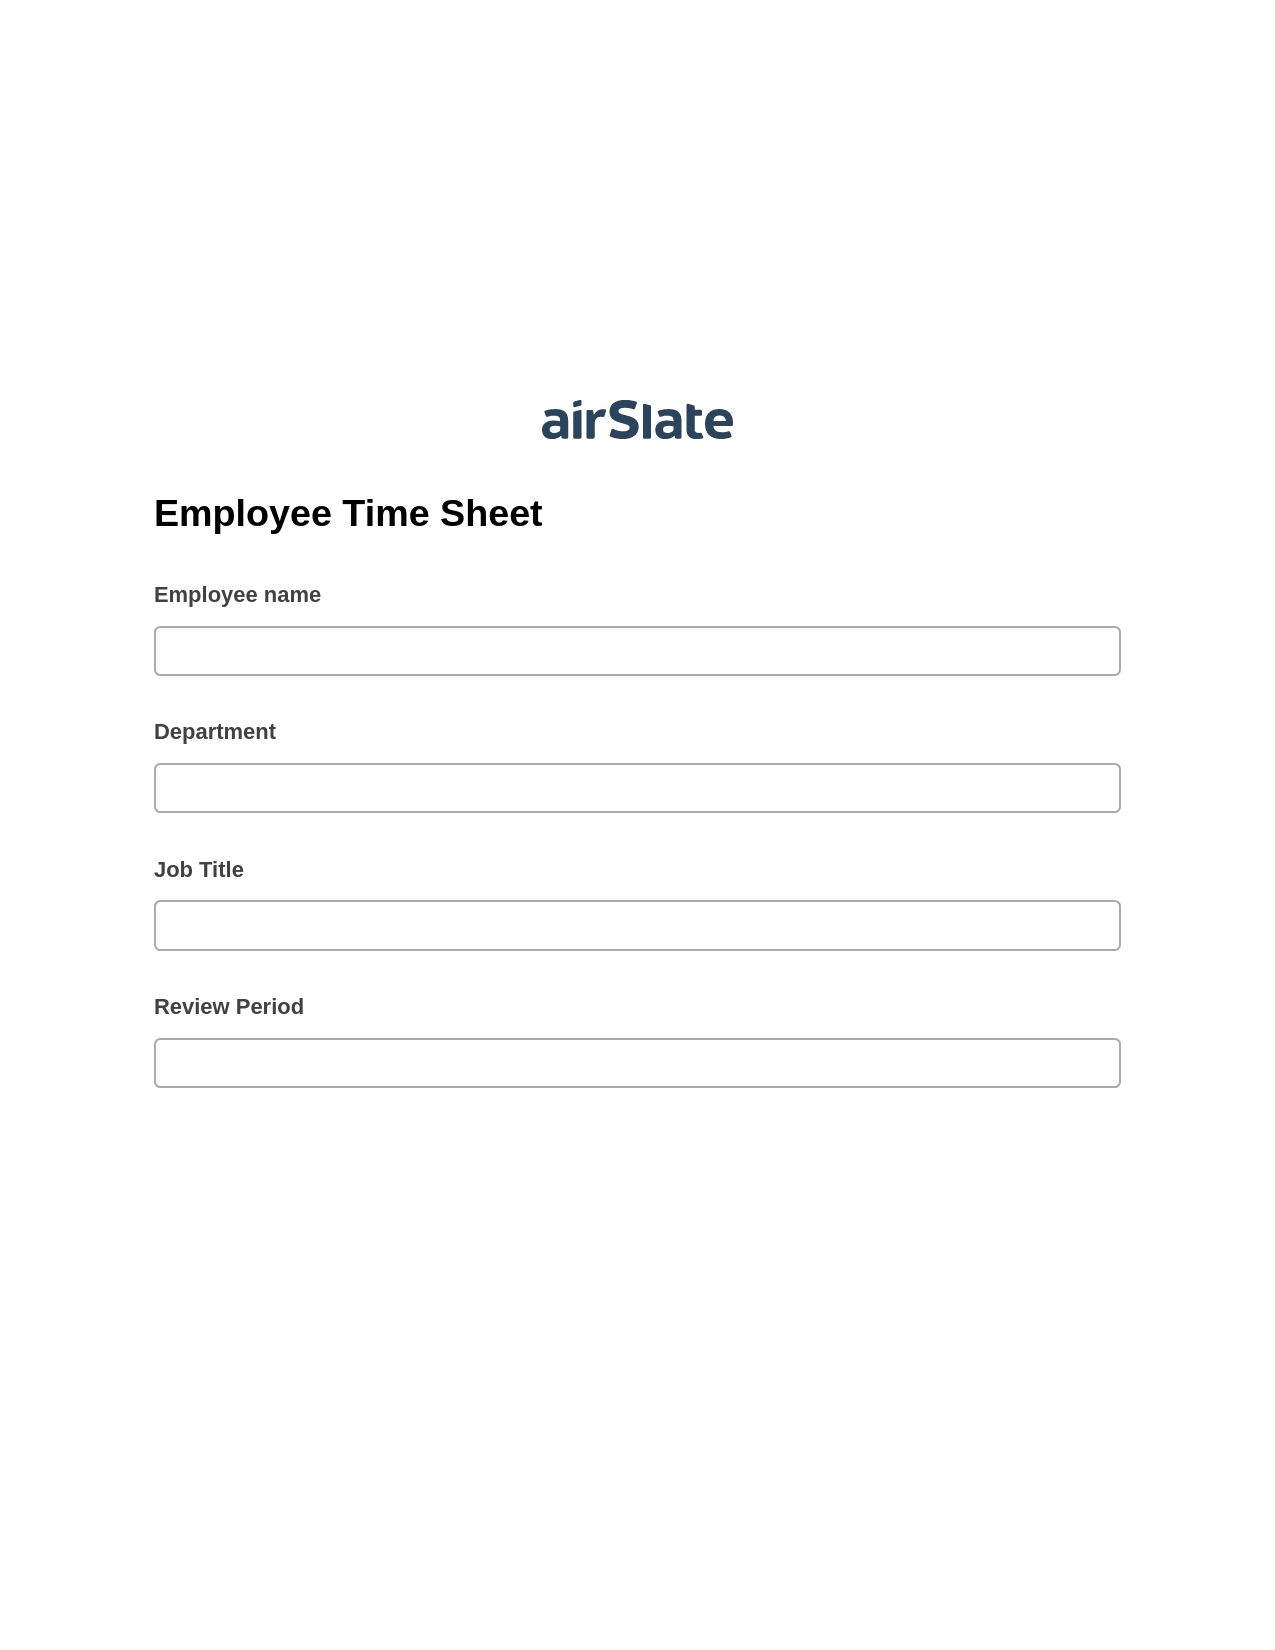 Employee Time Sheet Pre-fill from Google Sheets Bot, Google Calendar Bot, Slack Two-Way Binding Bot